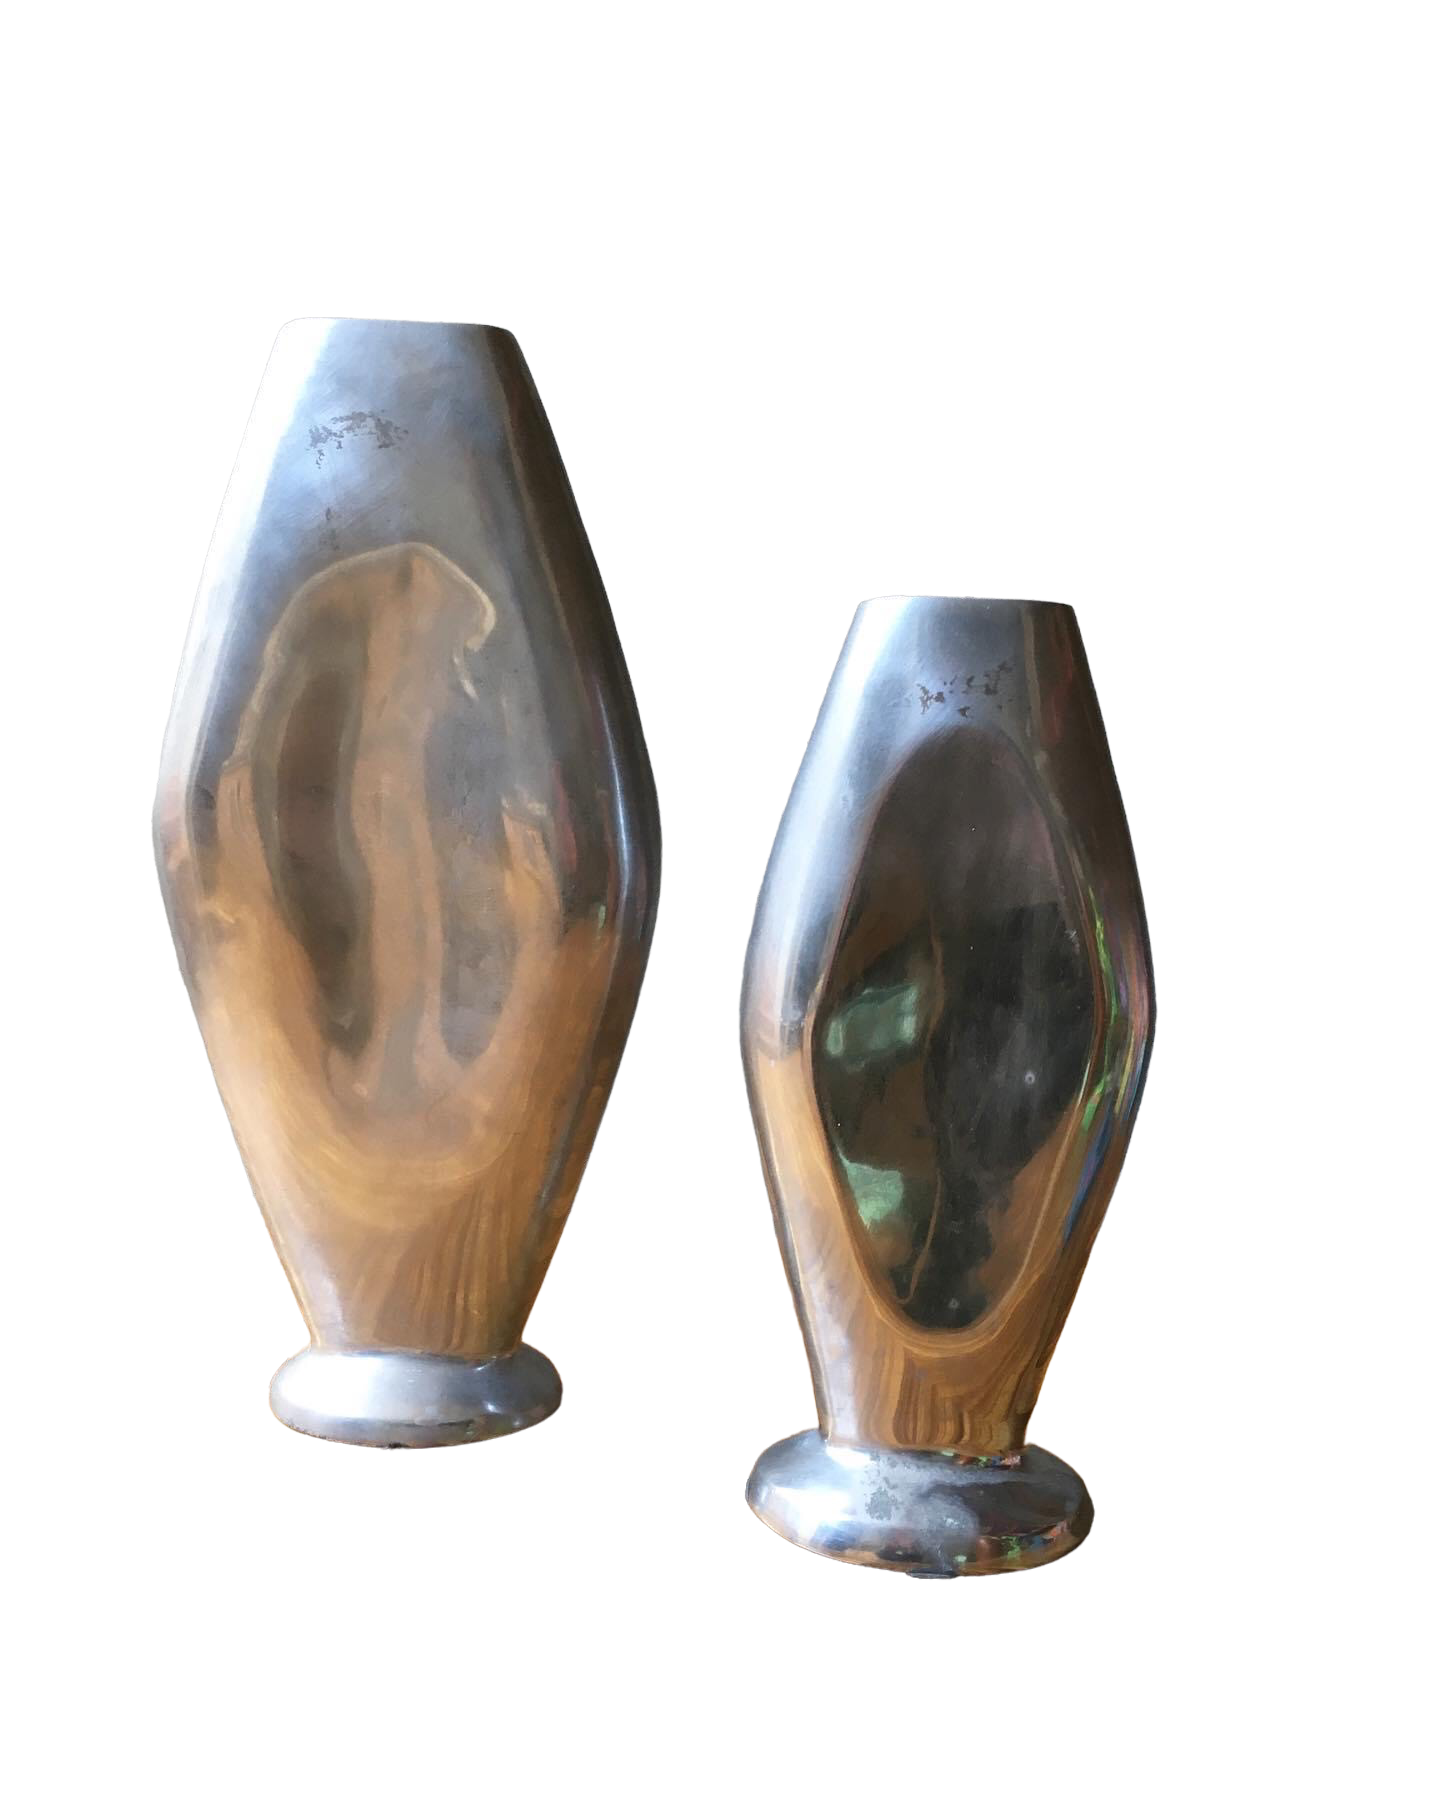 Stainless Vases